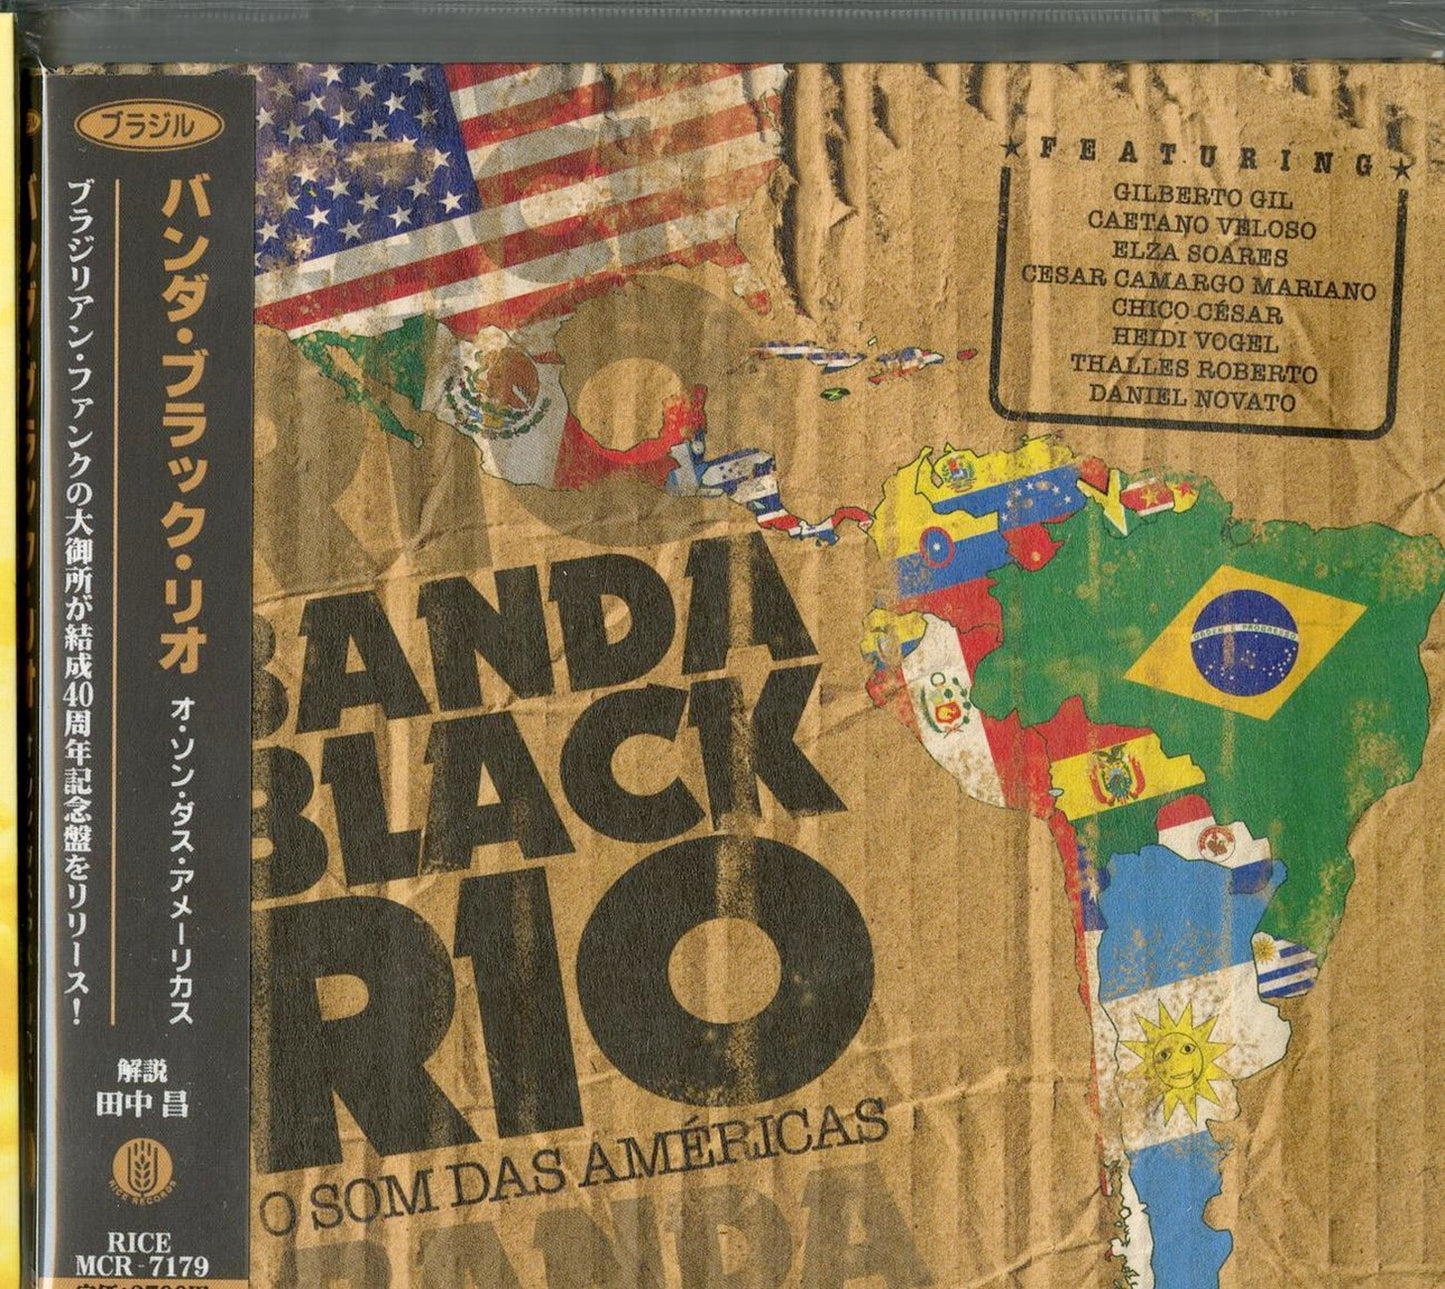 Banda Black Rio - O Som Das Americas - Japan CD